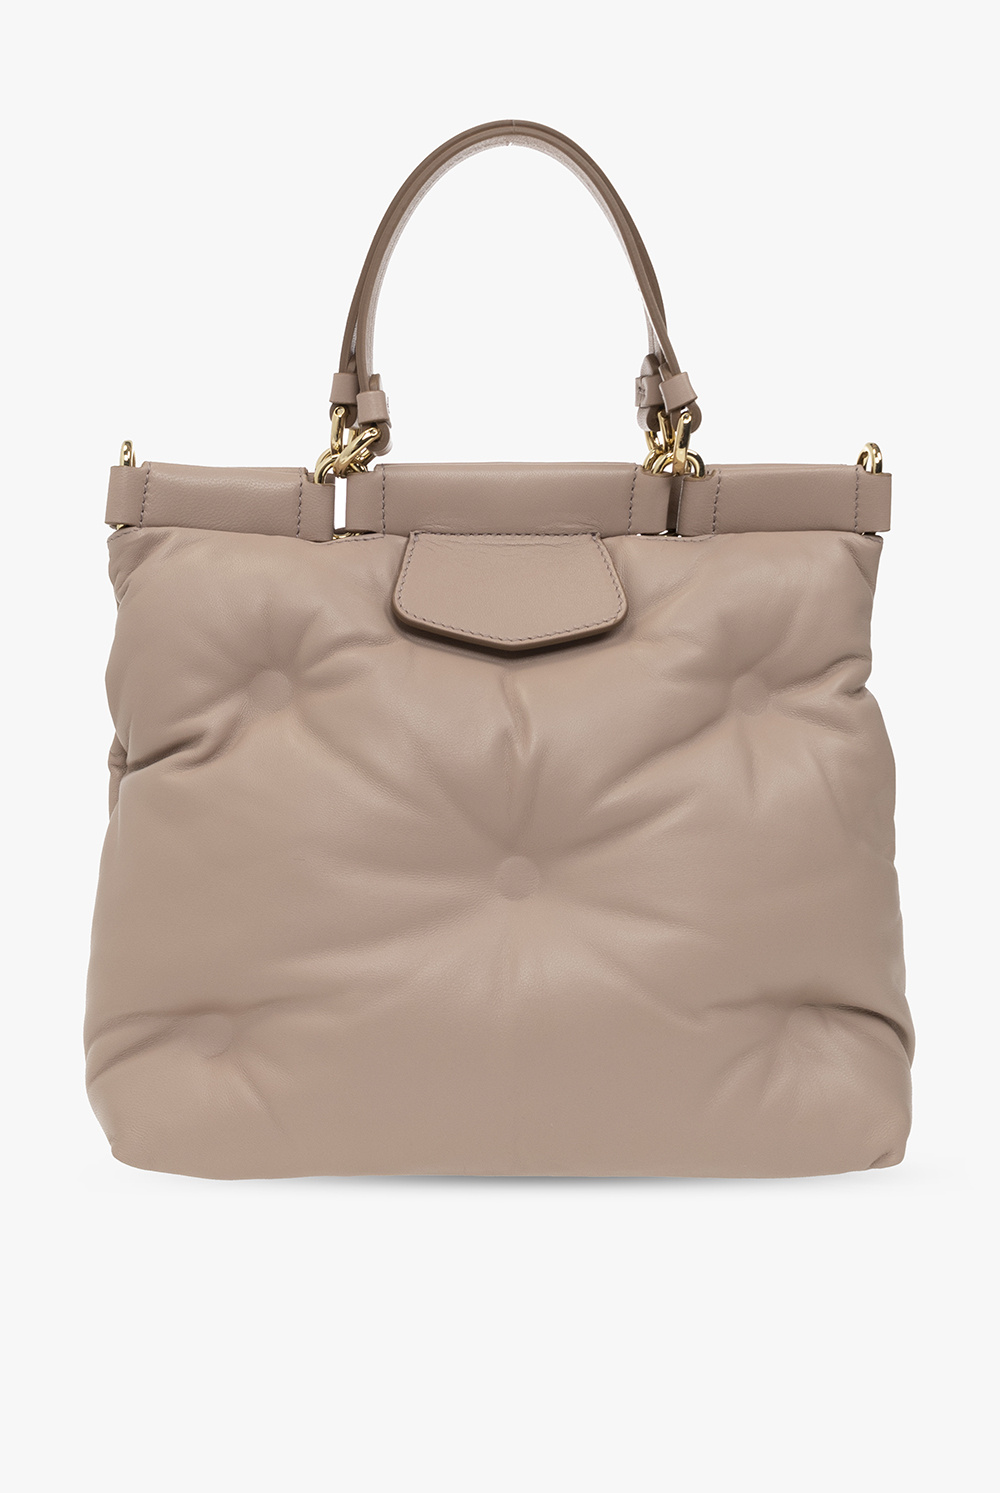 Maison Margiela ‘Glam Slam Small’ shoulder Company bag